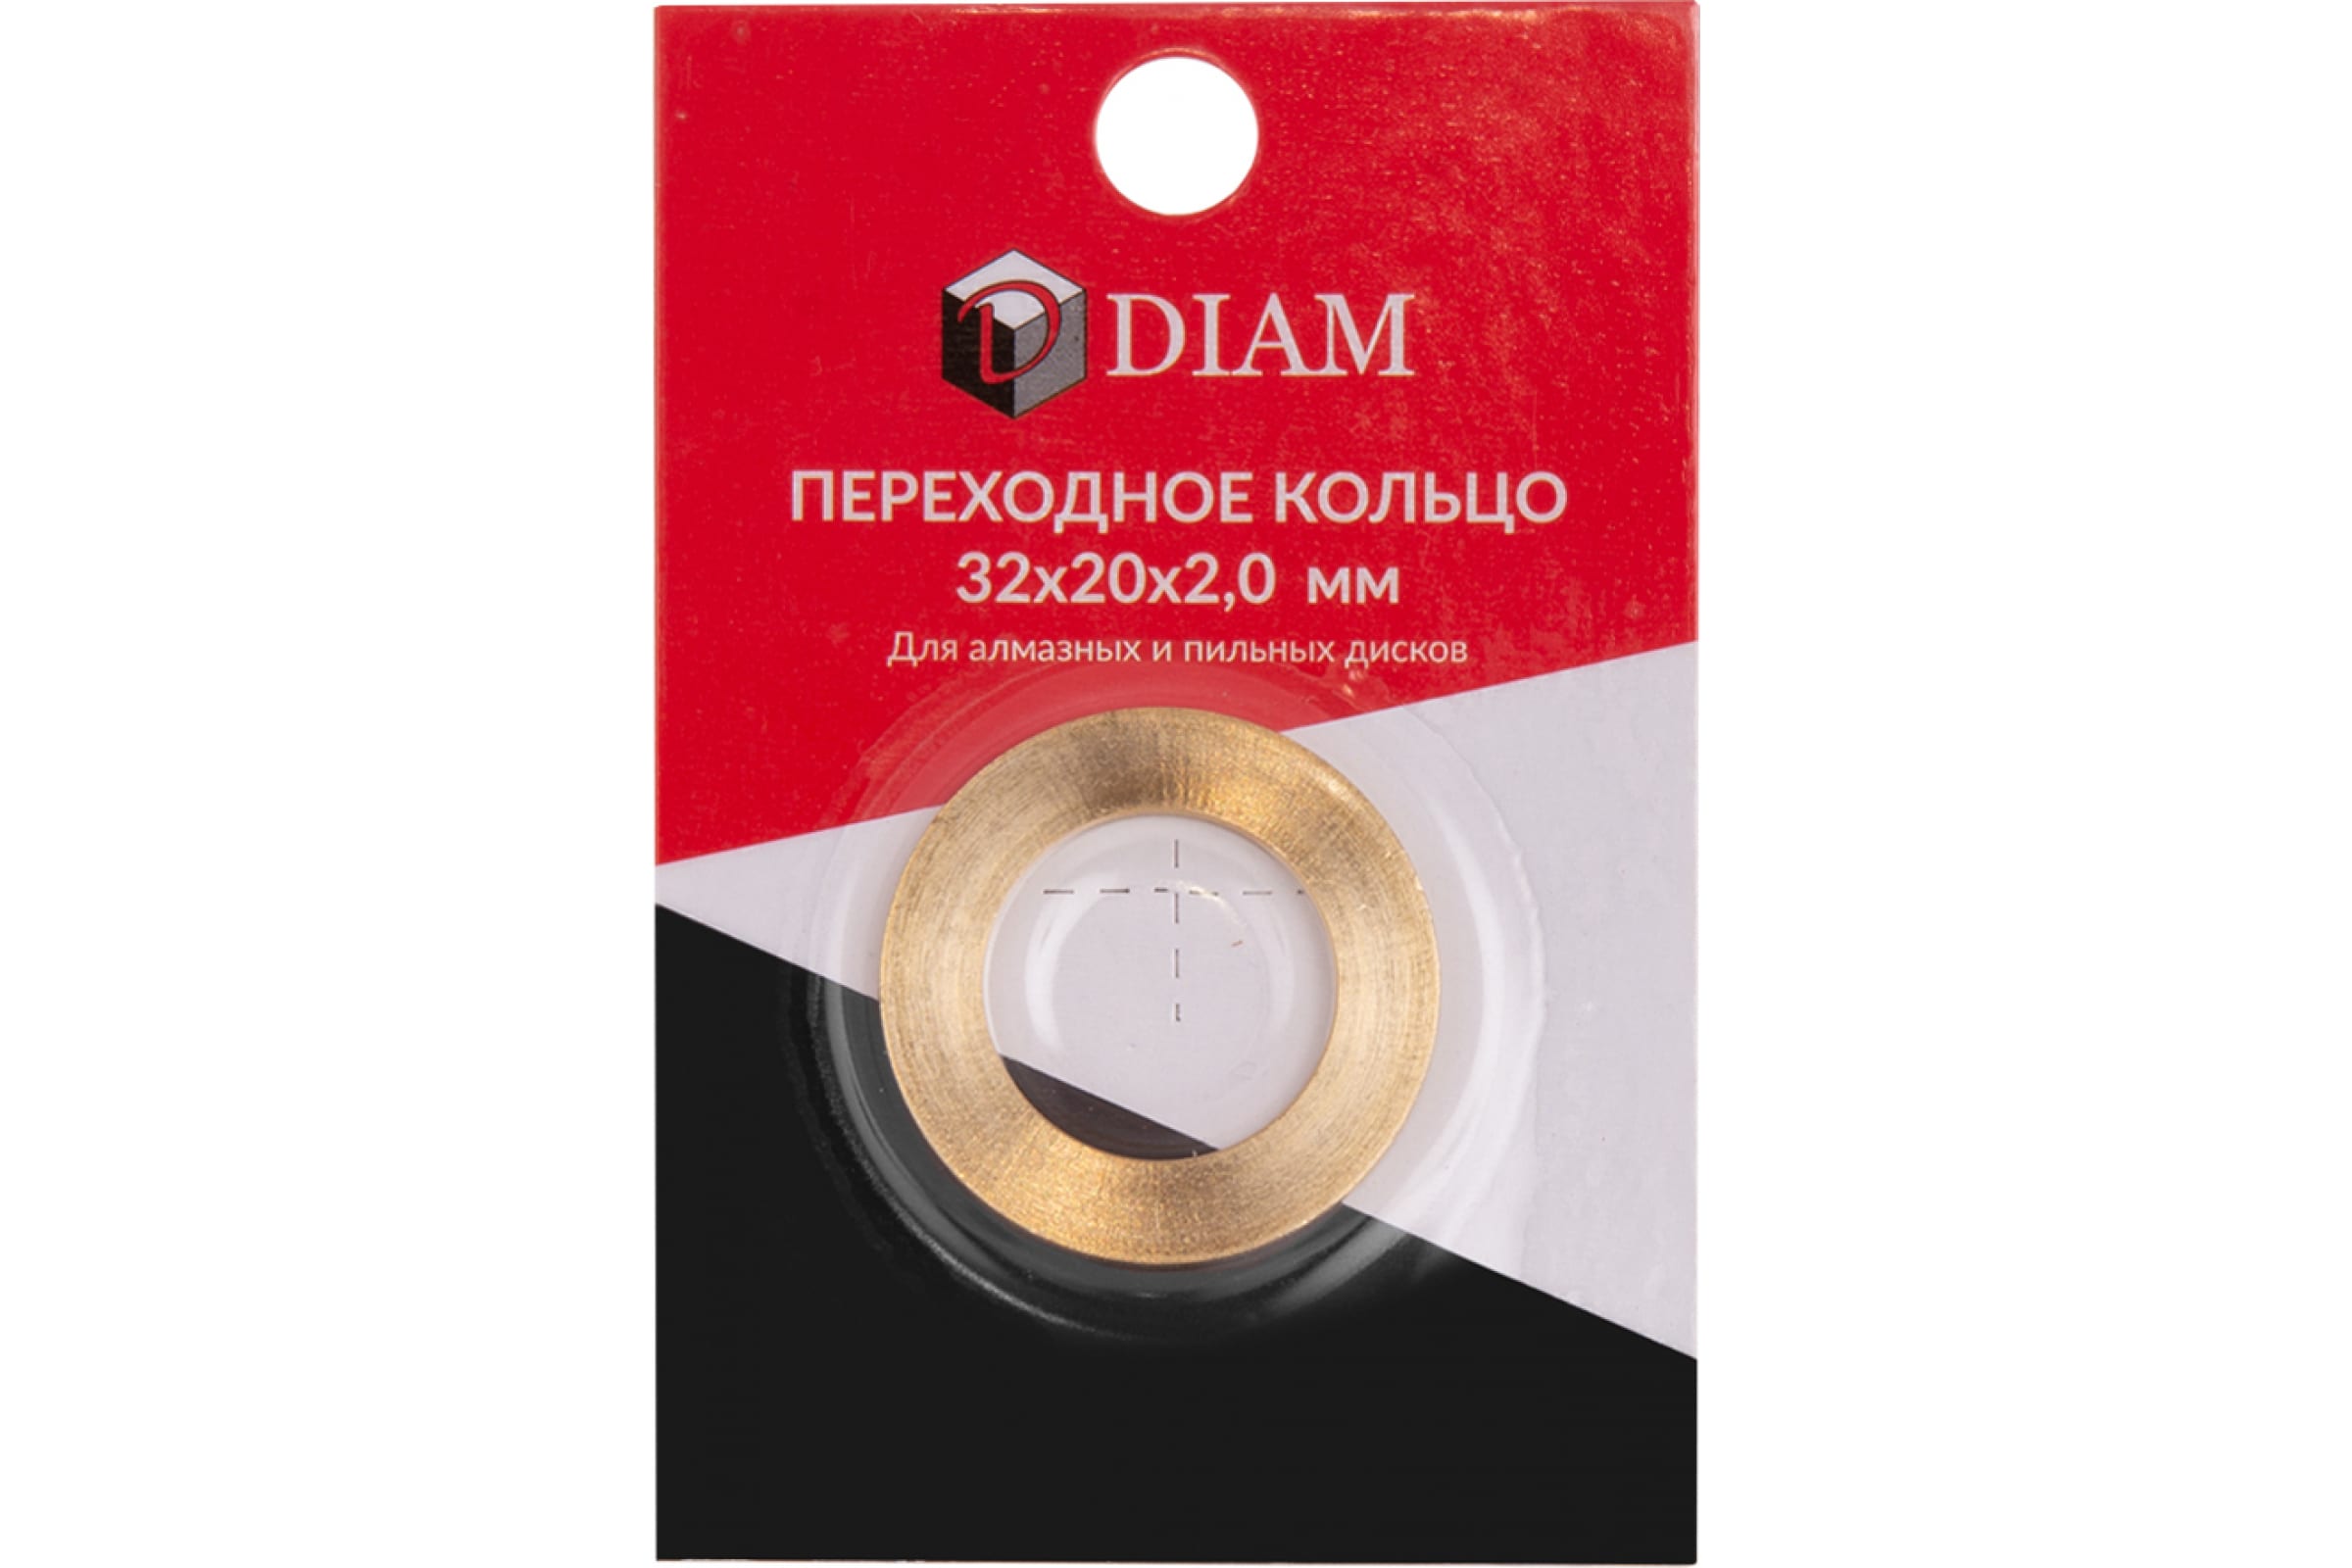 DIAM Переходное кольцо 32х20х2,0 640085 переходное кольцо diam